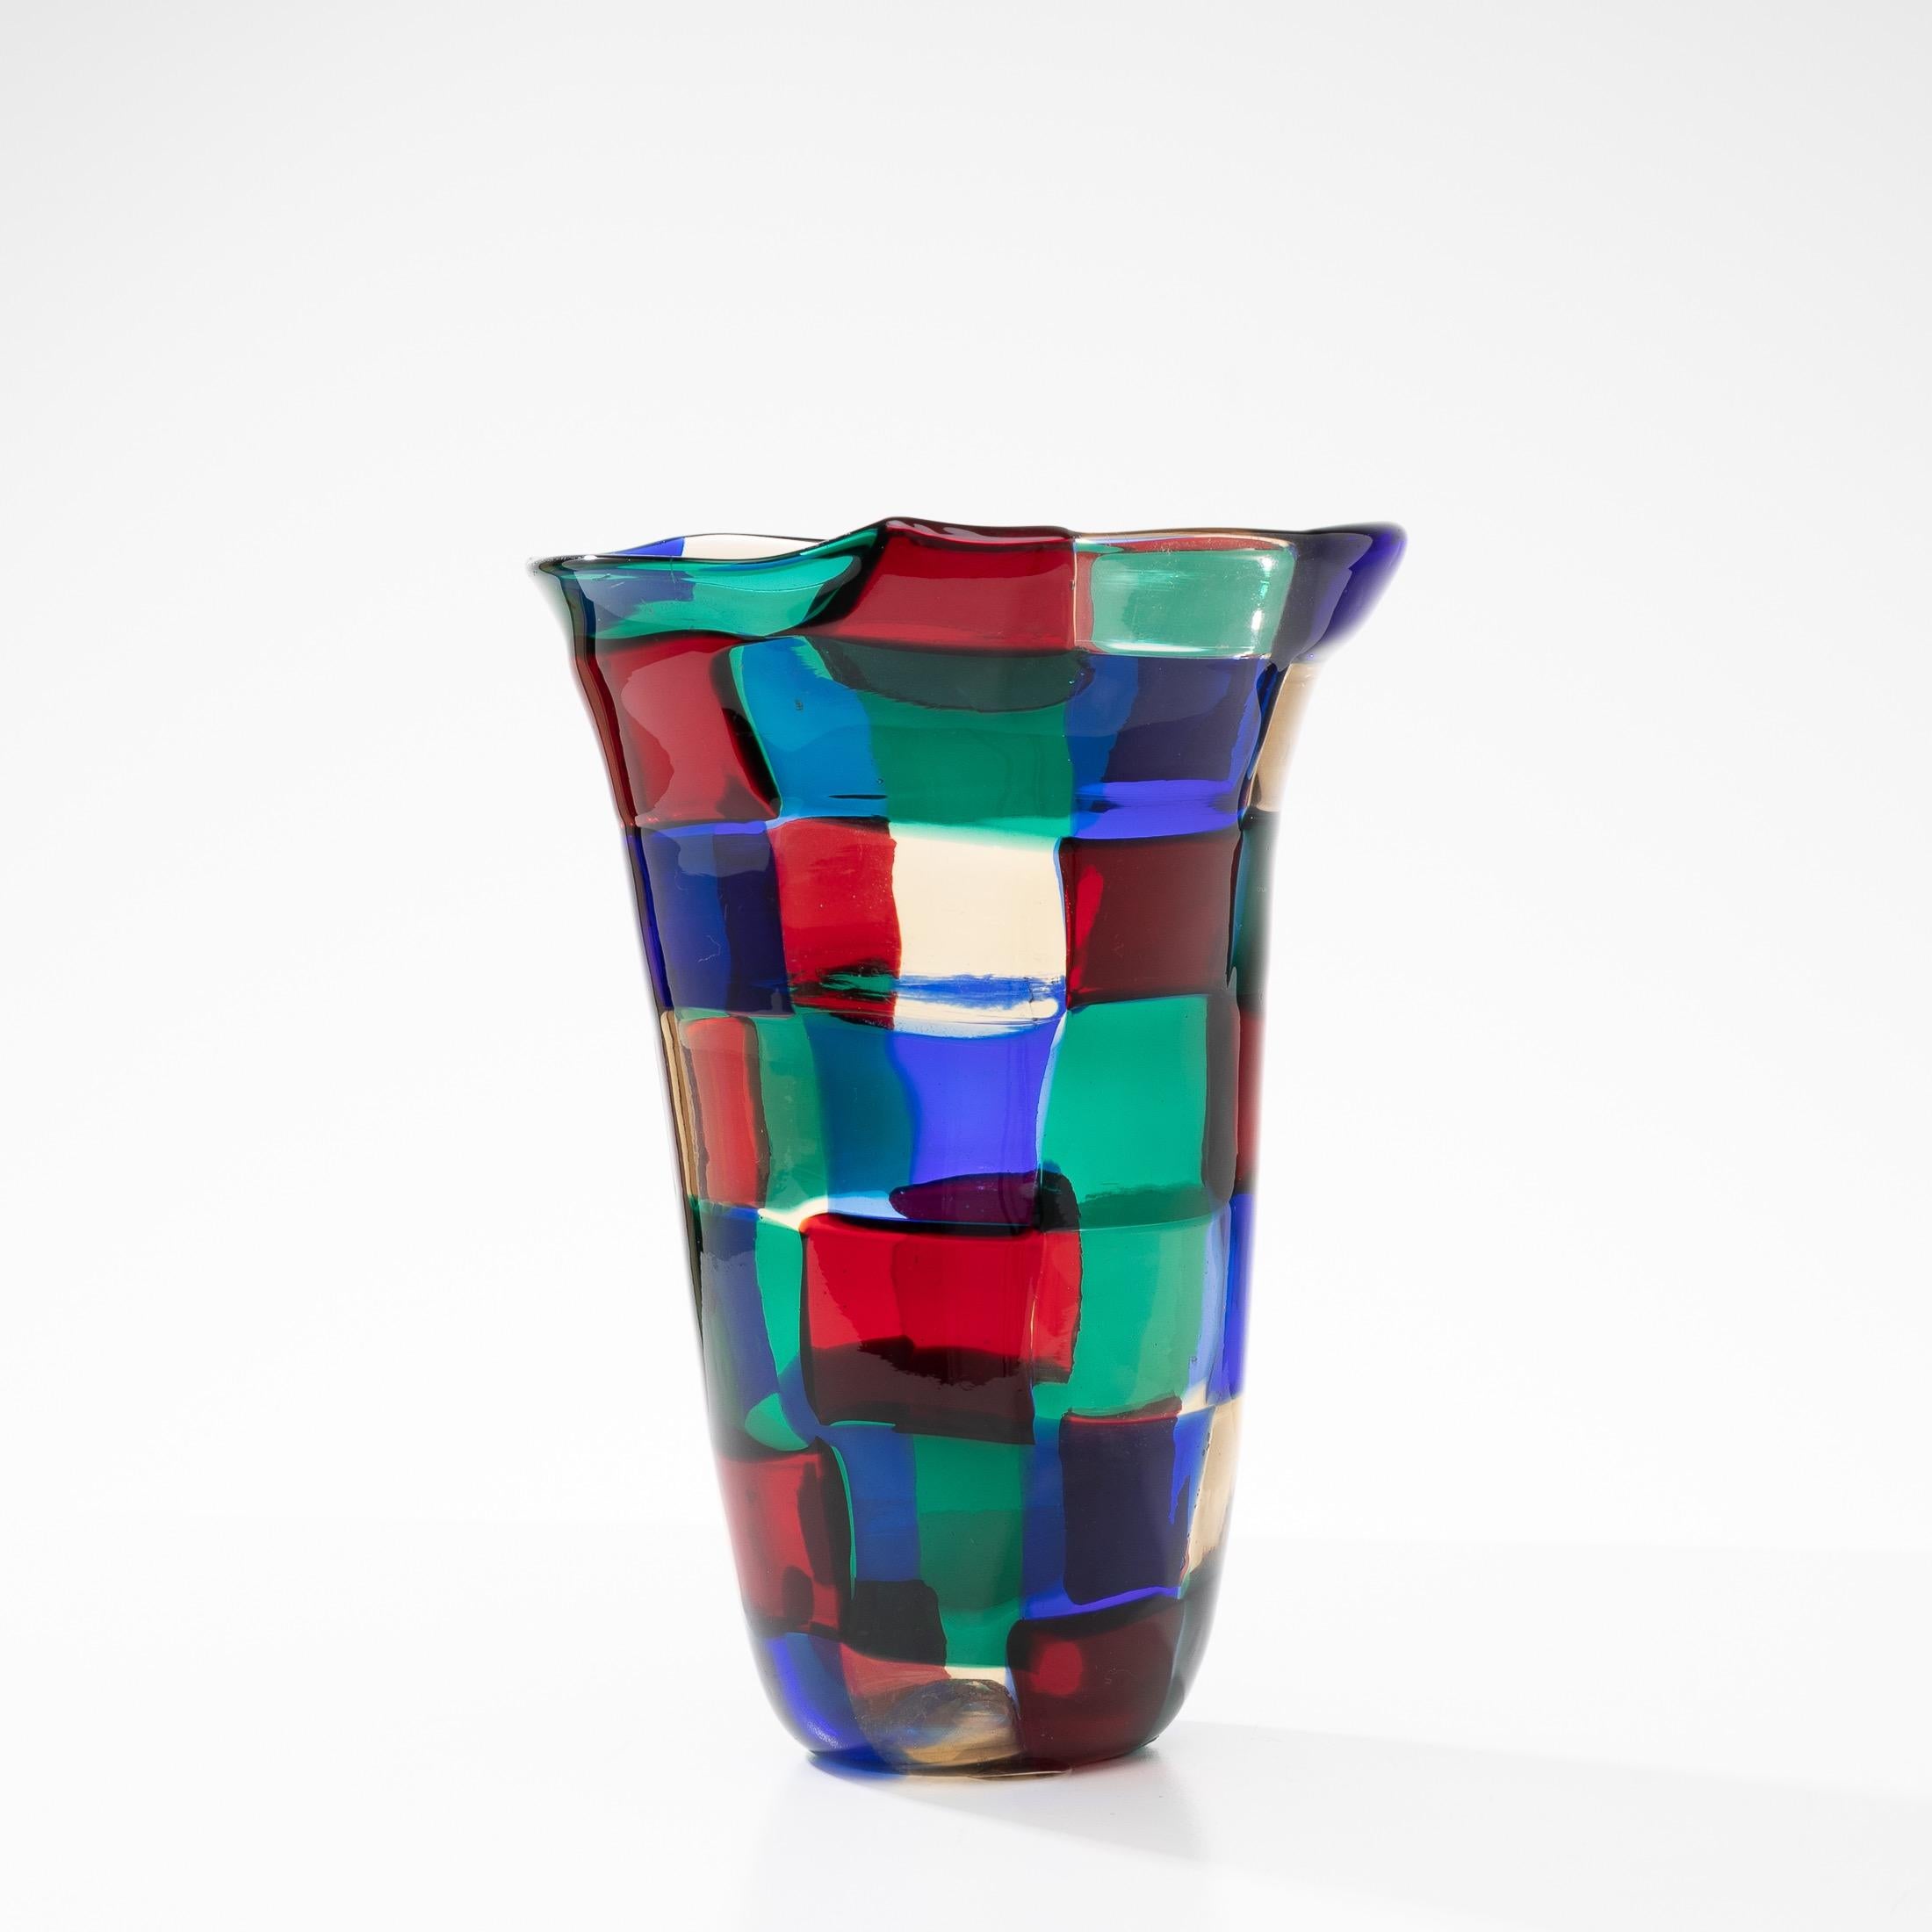 20th Century Pezzato Vase by Fulvio Bianconi, Color Variant “Parigi”, Venini Murano, Italy